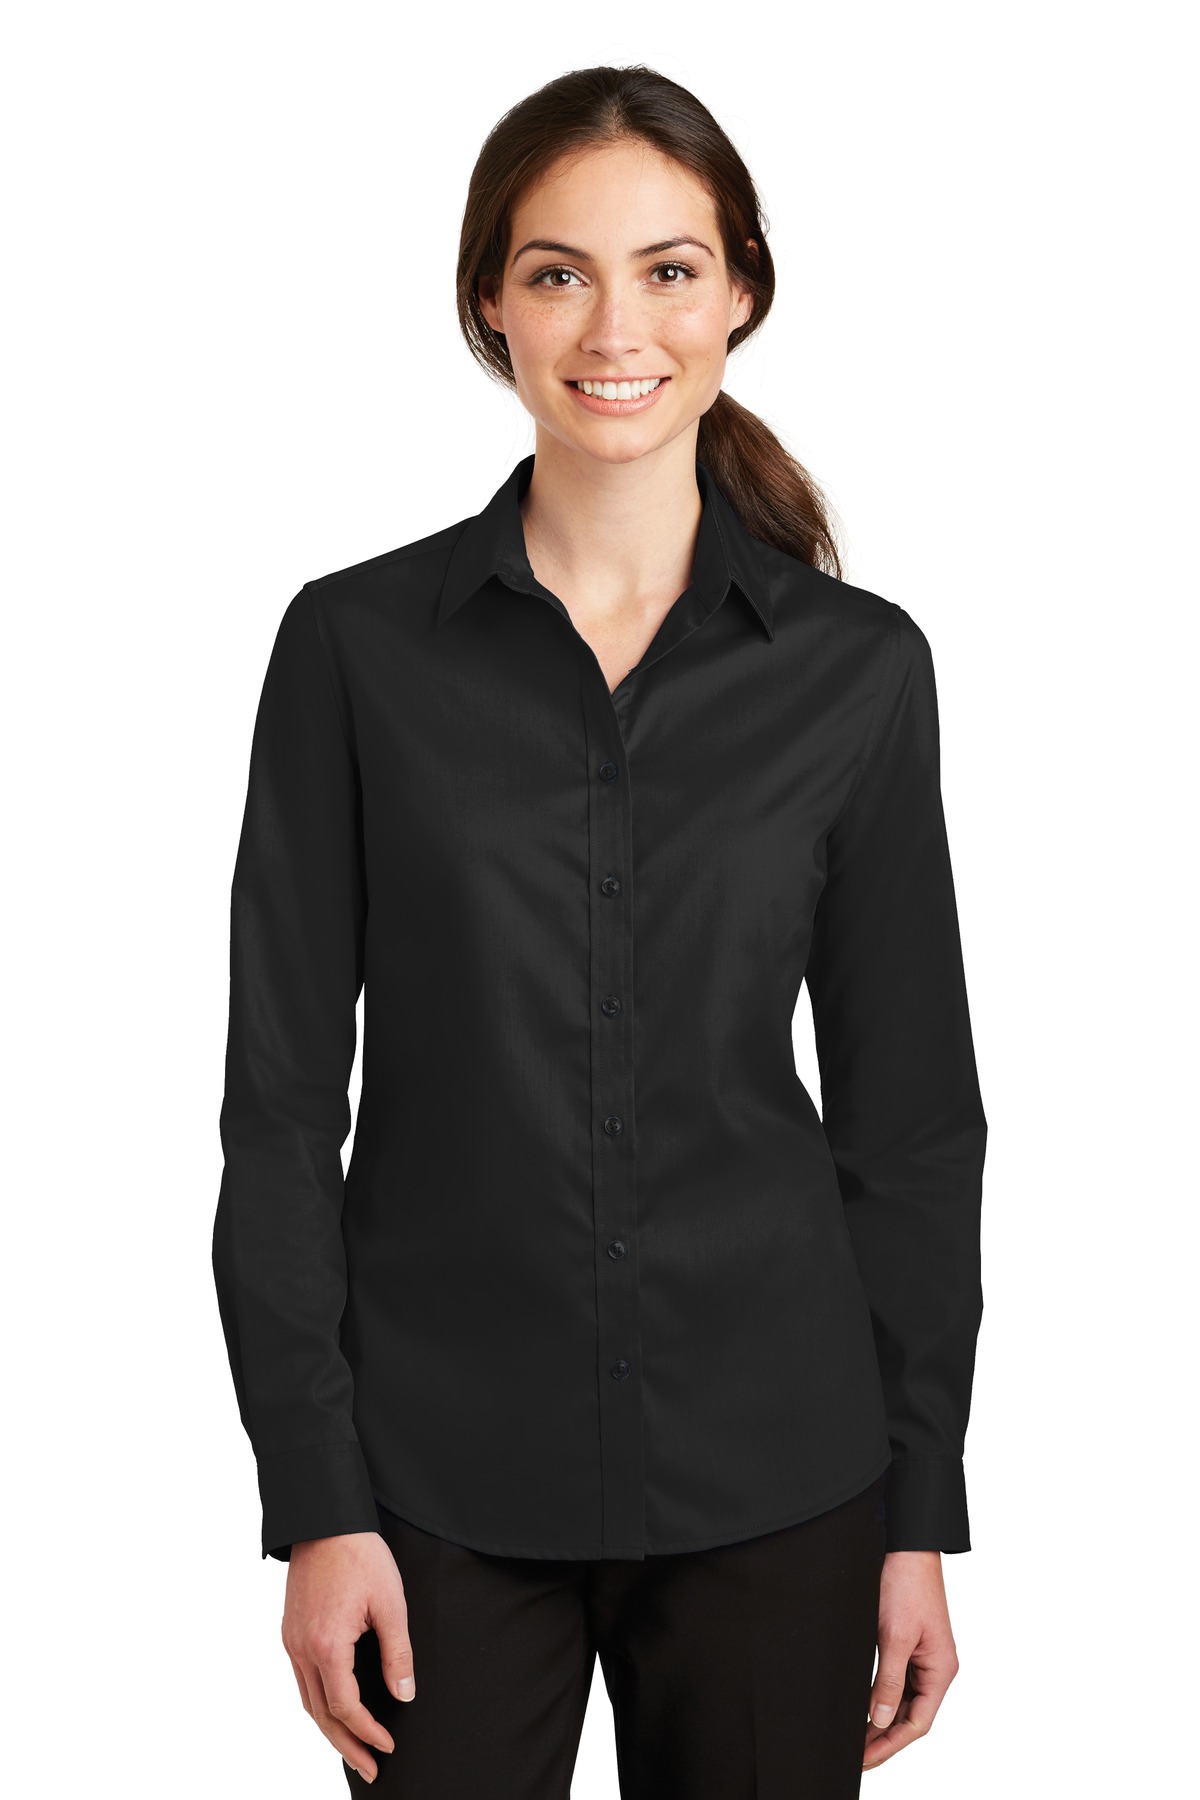 Port Authority Ladies SuperPro Twill Shirt - L663